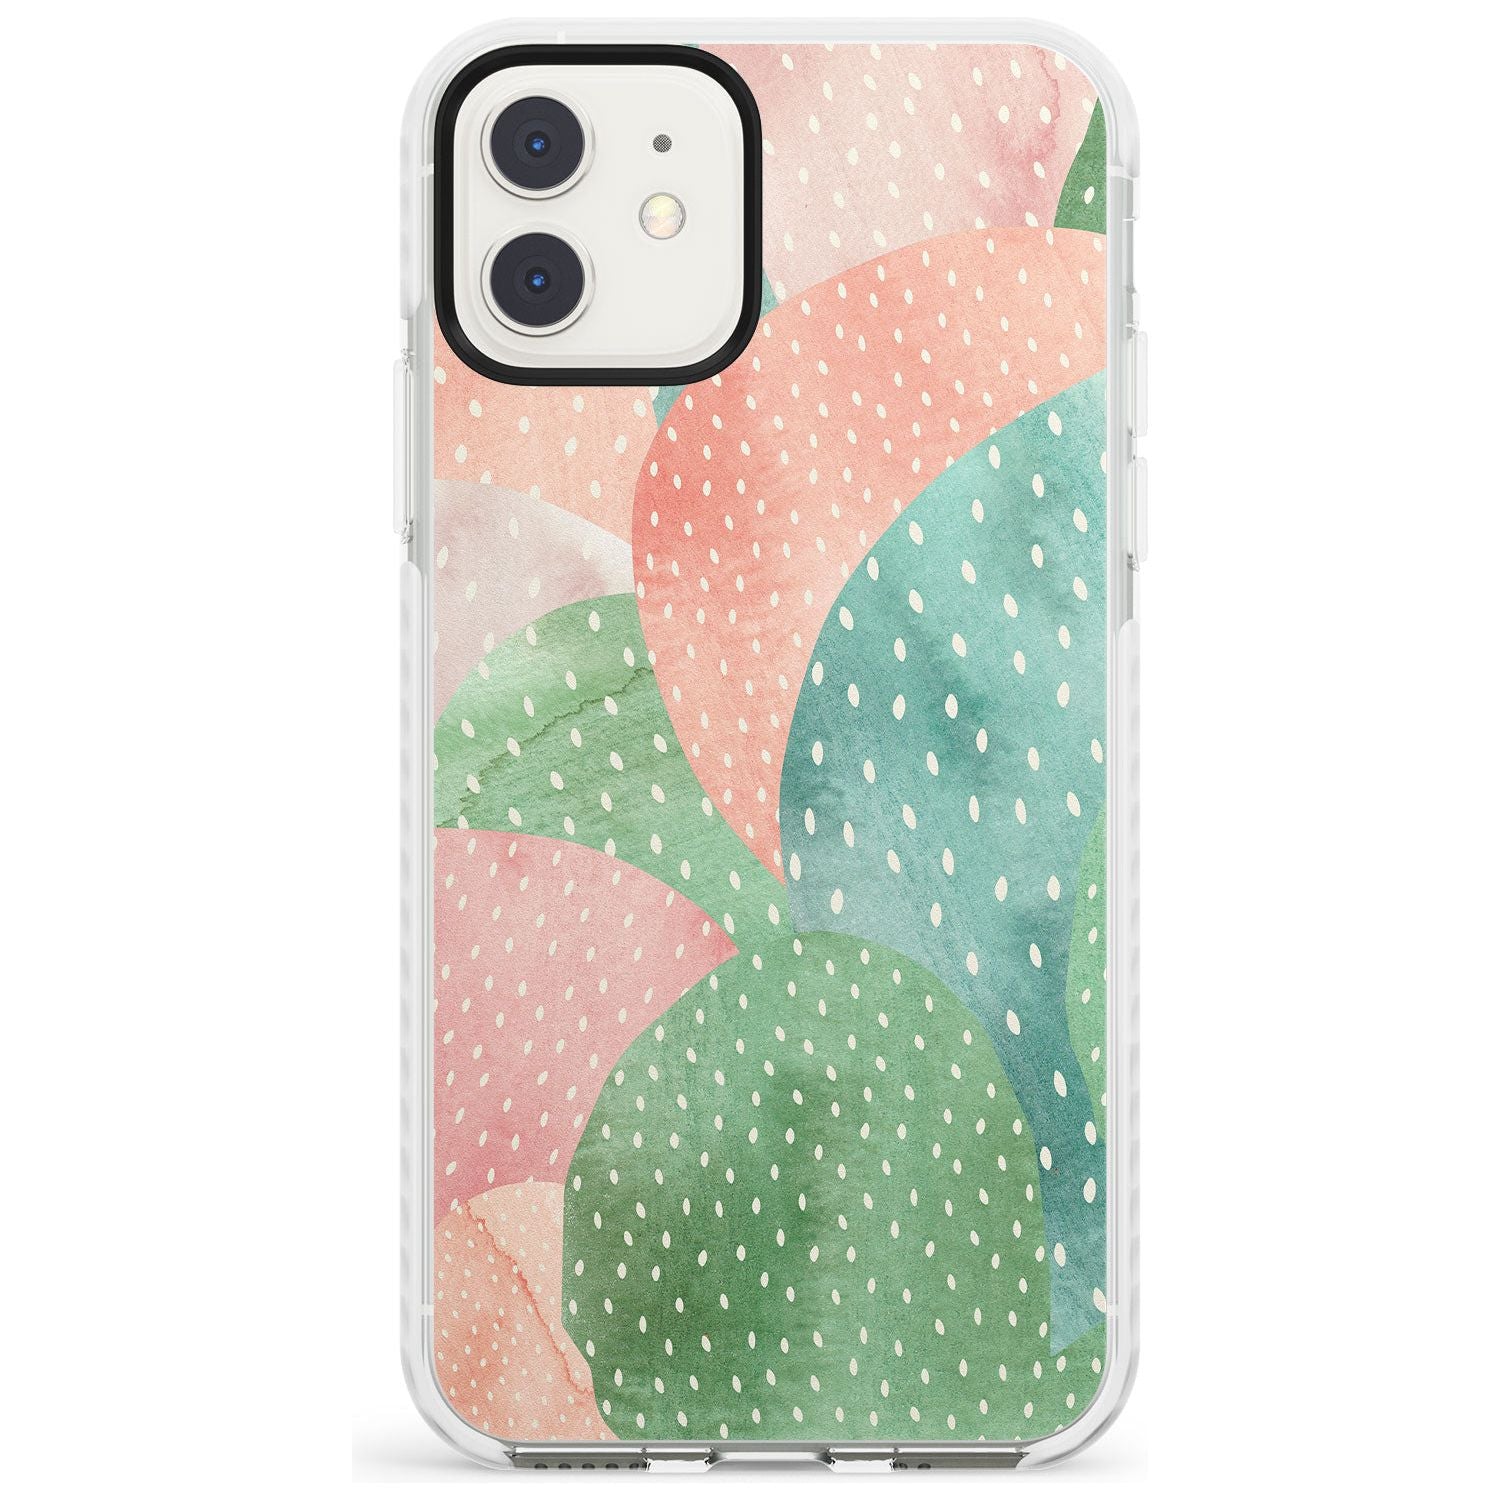 Colourful Close-Up Cacti Design Impact Phone Case for iPhone 11